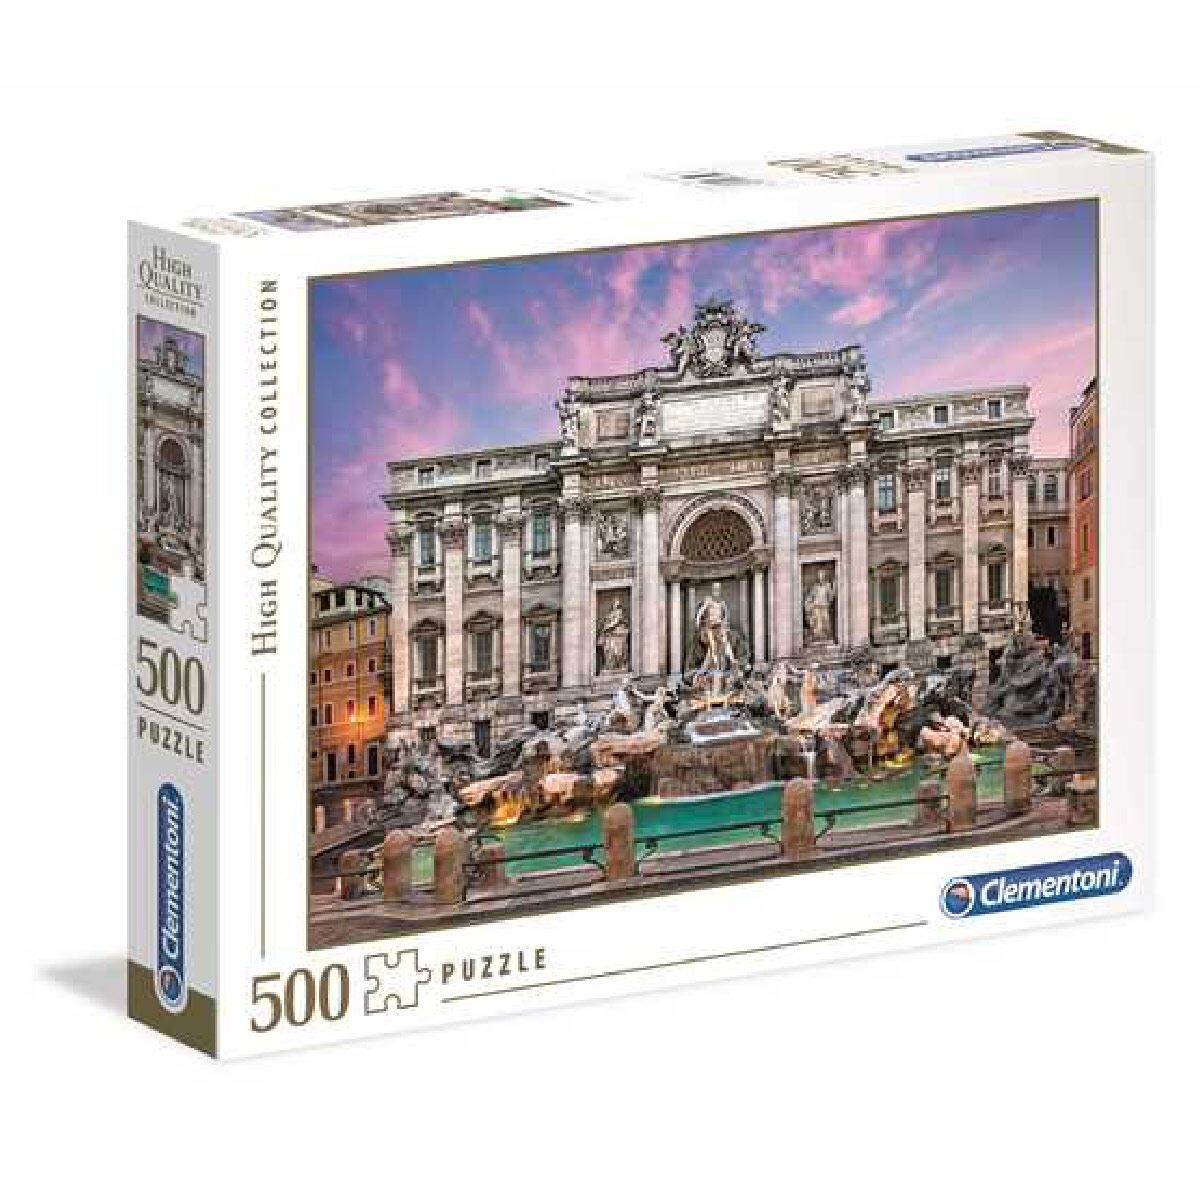 Puzzle Clementoni 500 piezas Fontana Di Trev High Quality - 001 